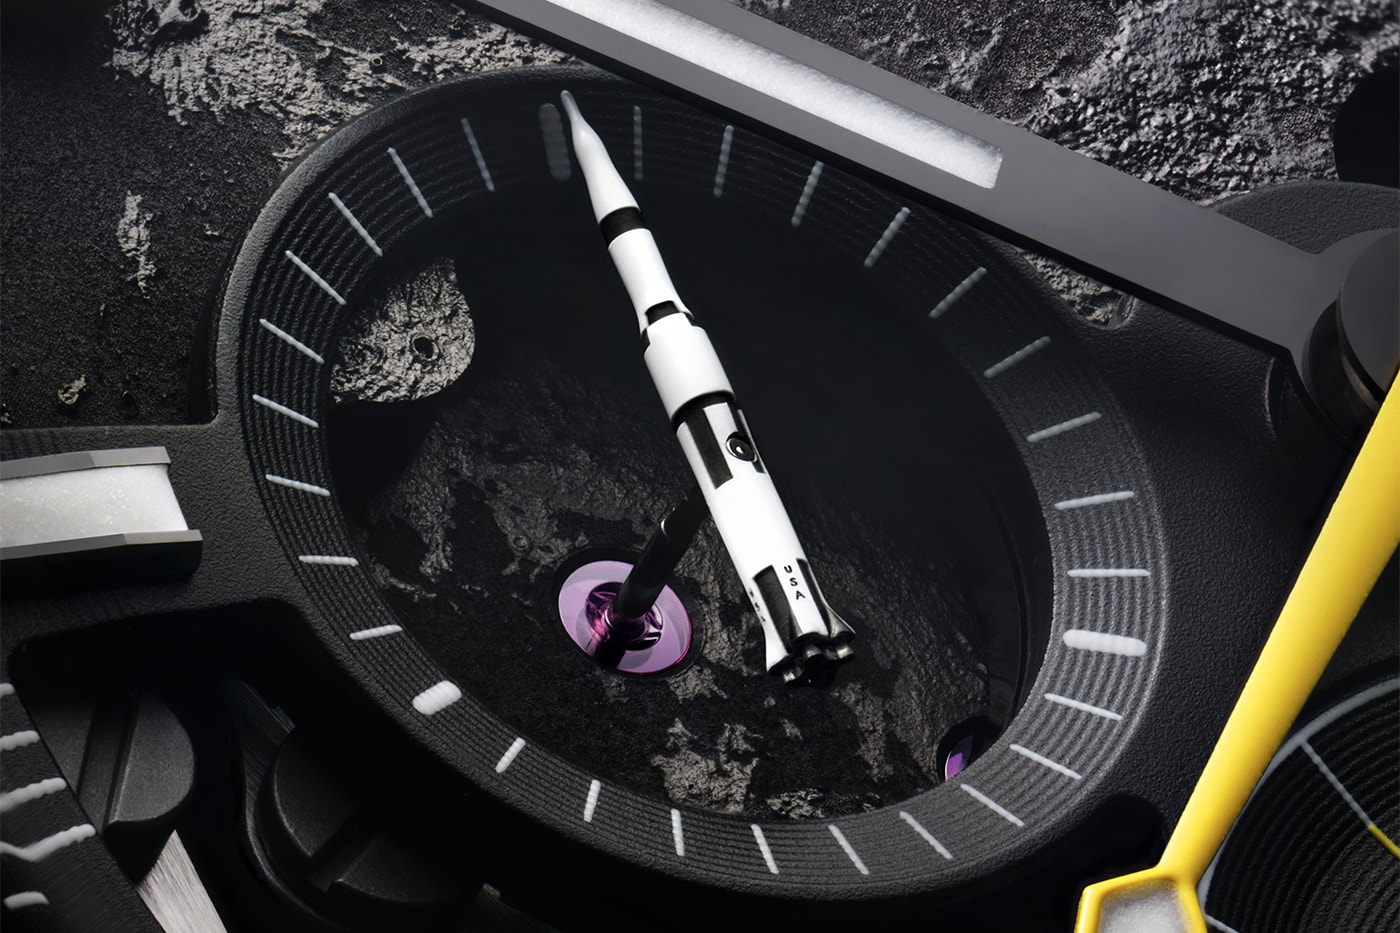 OMEGA Speedmaster 推出全新「月之暗面 Apollo 8」特別版錶款